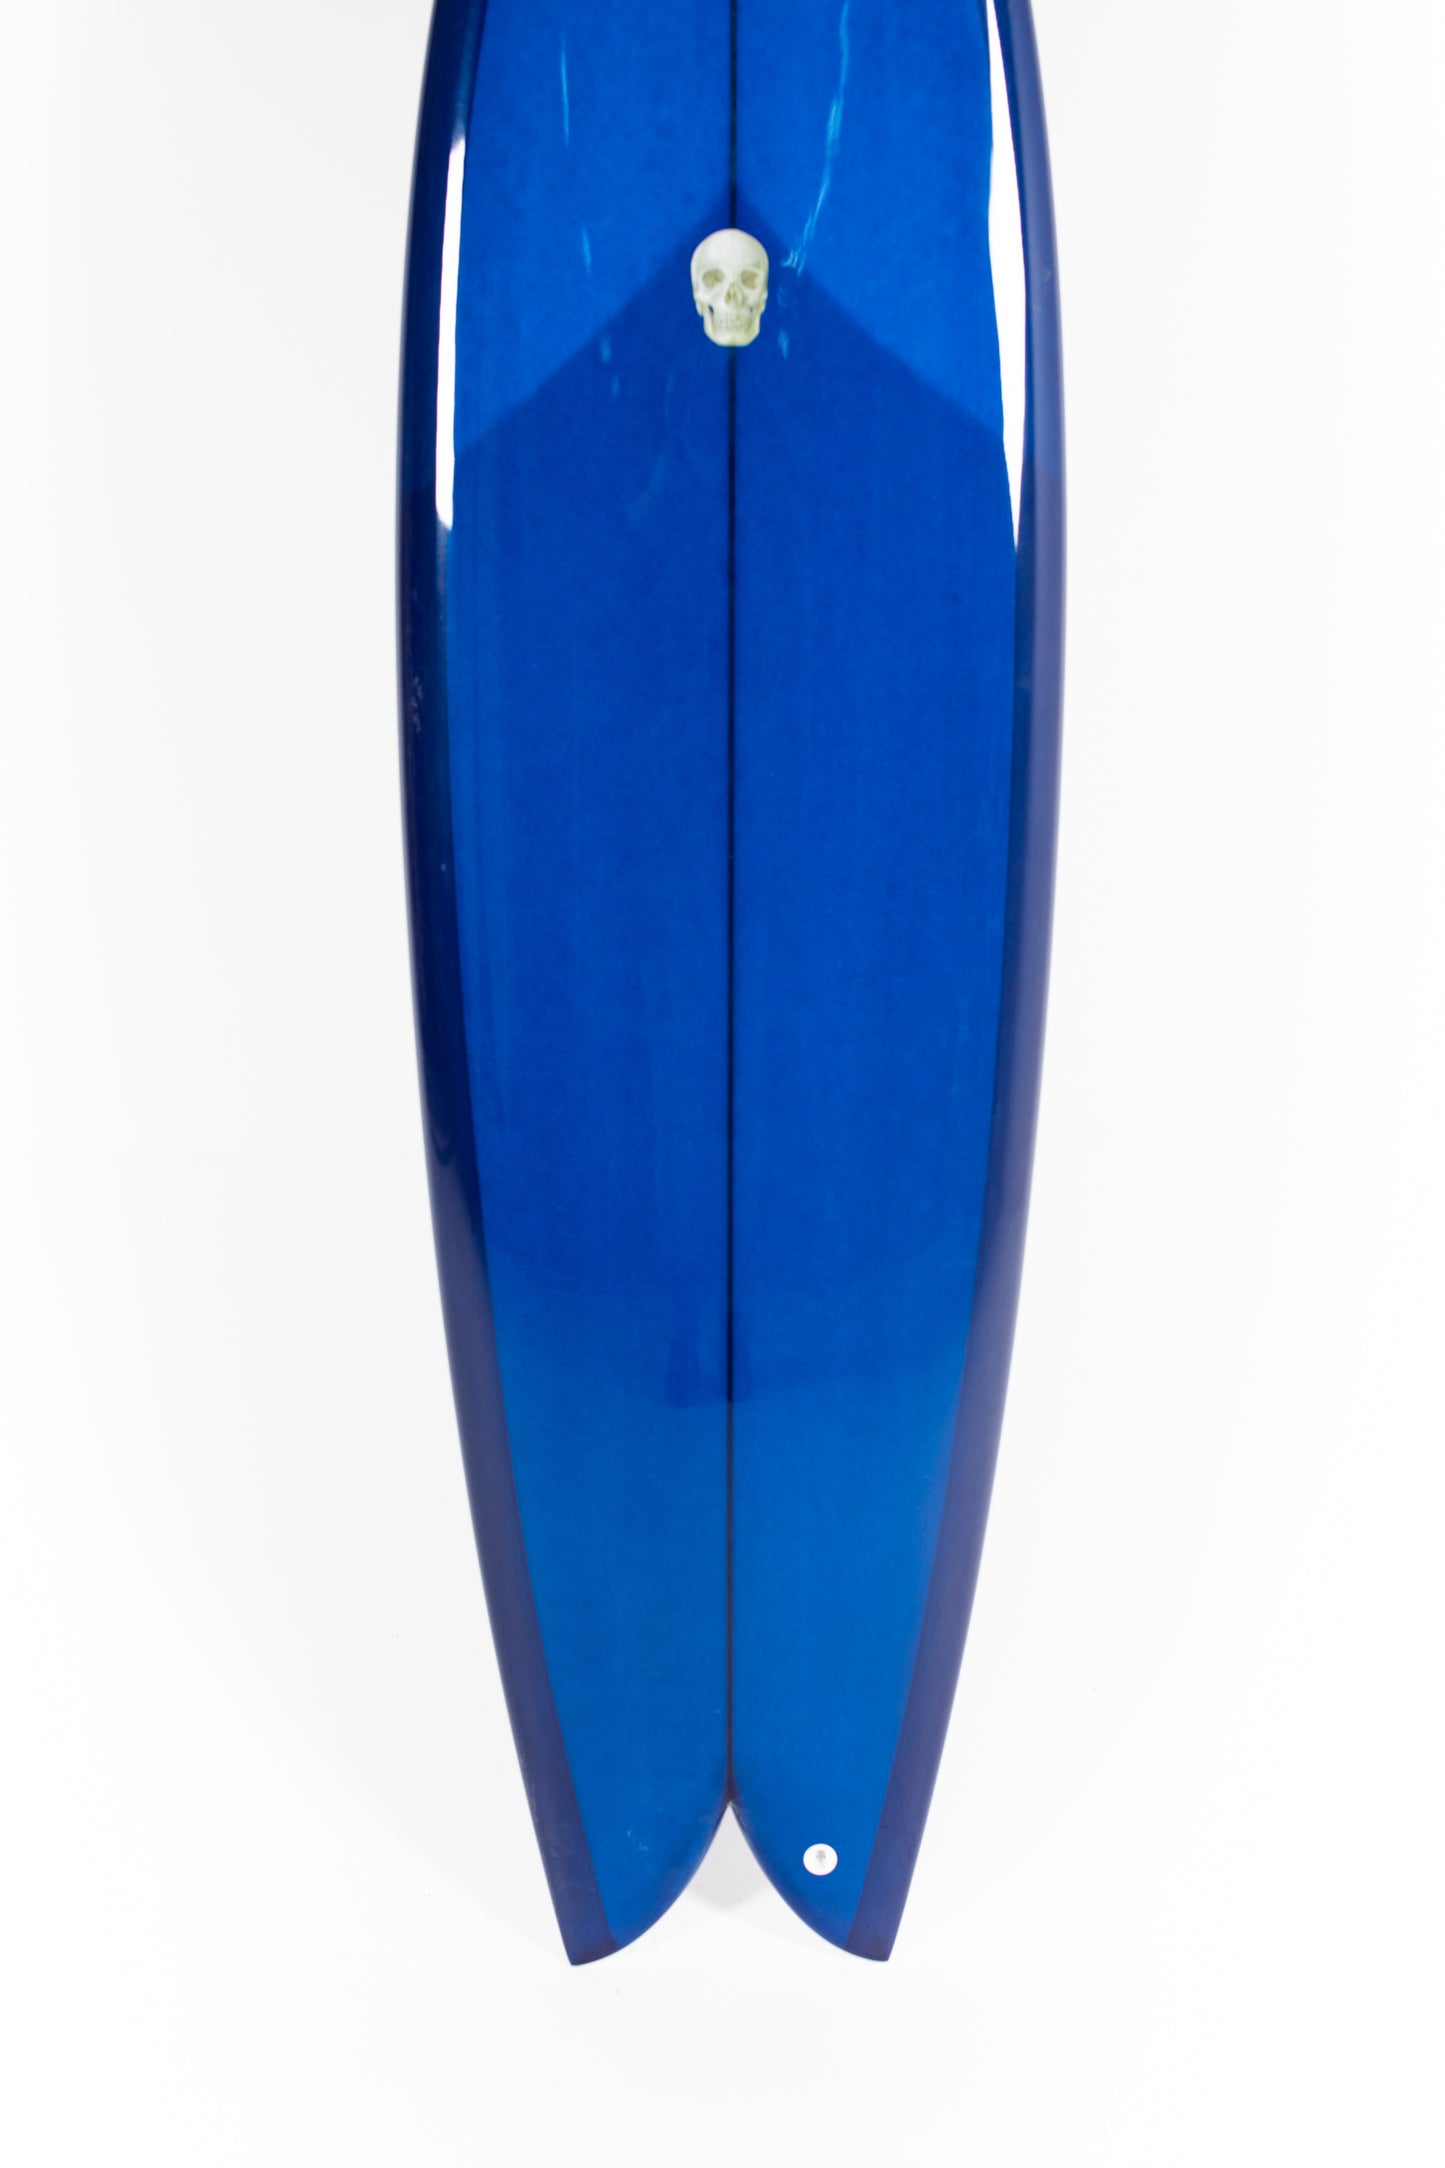 
                  
                    Pukas Surf Shop - Christenson Surfboards - LONG PHISH - 6'8" x 20 3/4 x 2 9/16 - CX04595
                  
                